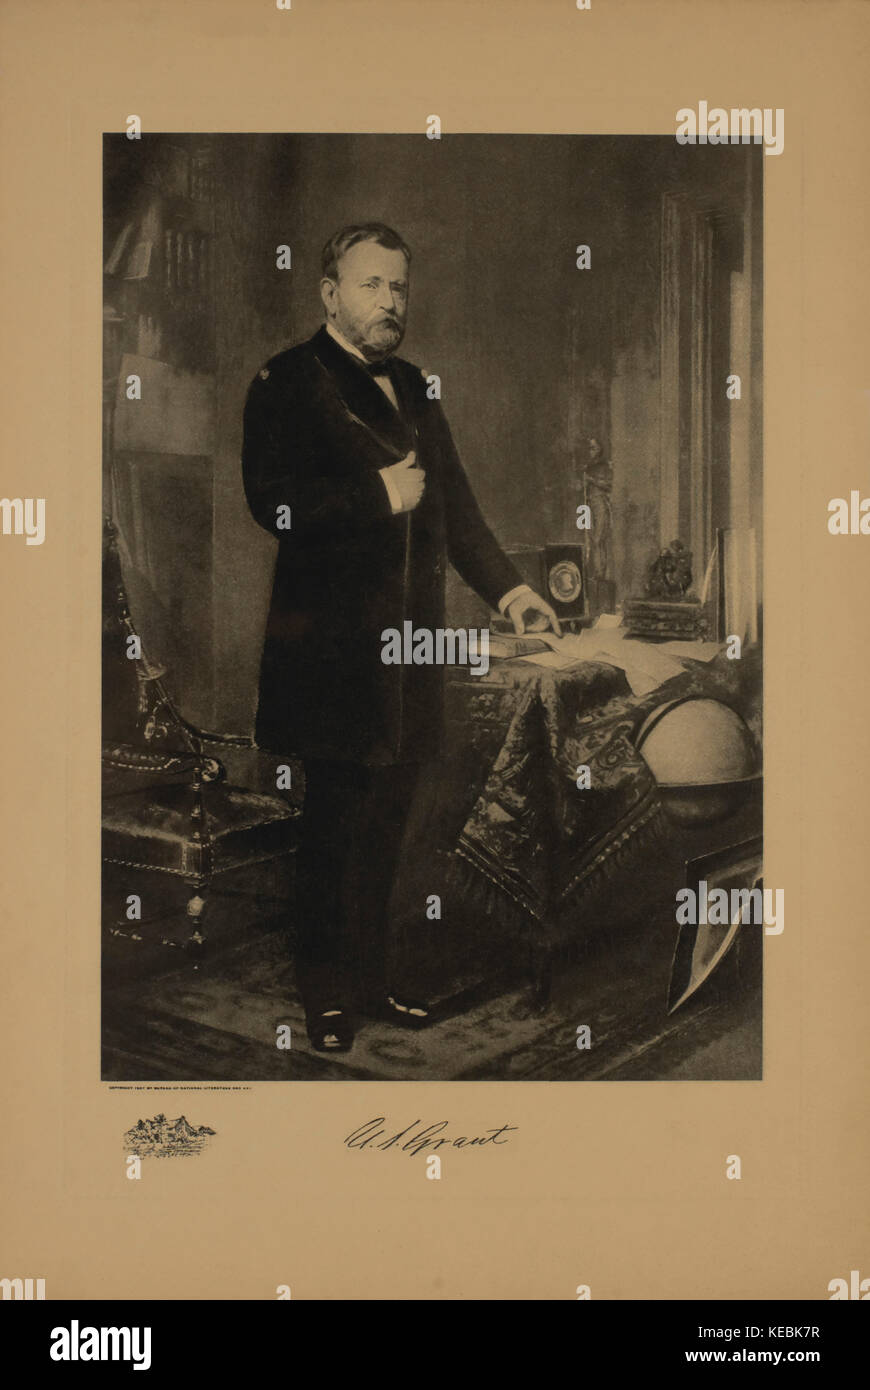 Ulysses S. Grant, Bureau of National Literature and Art, 1907 Stock Photo